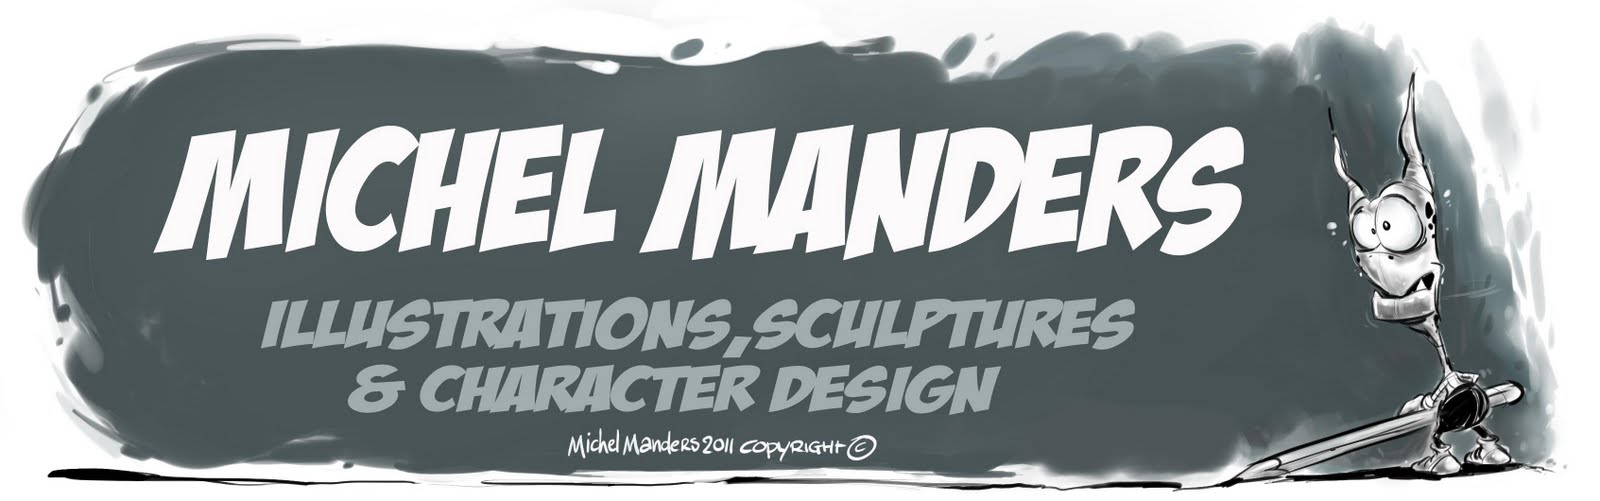 illustrations,sculptures & character design